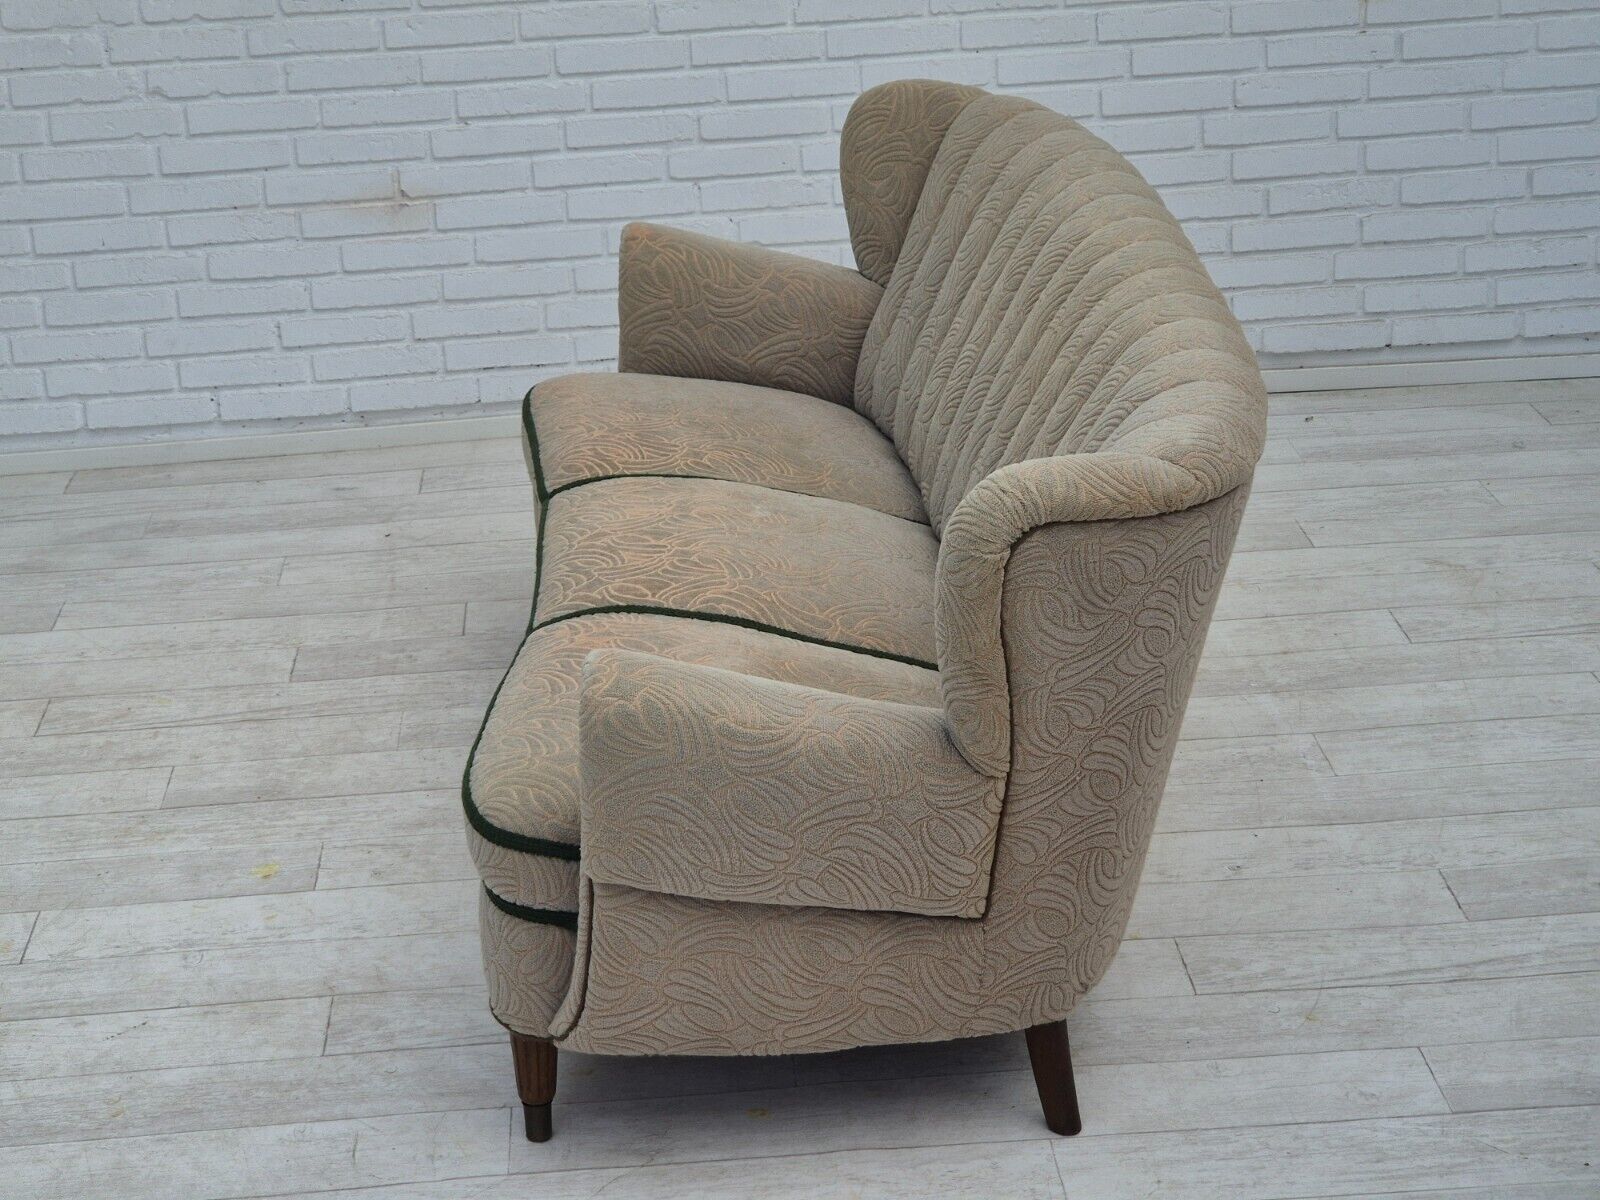 1960s Danish 3 seater sofa original good condition cotton-wool